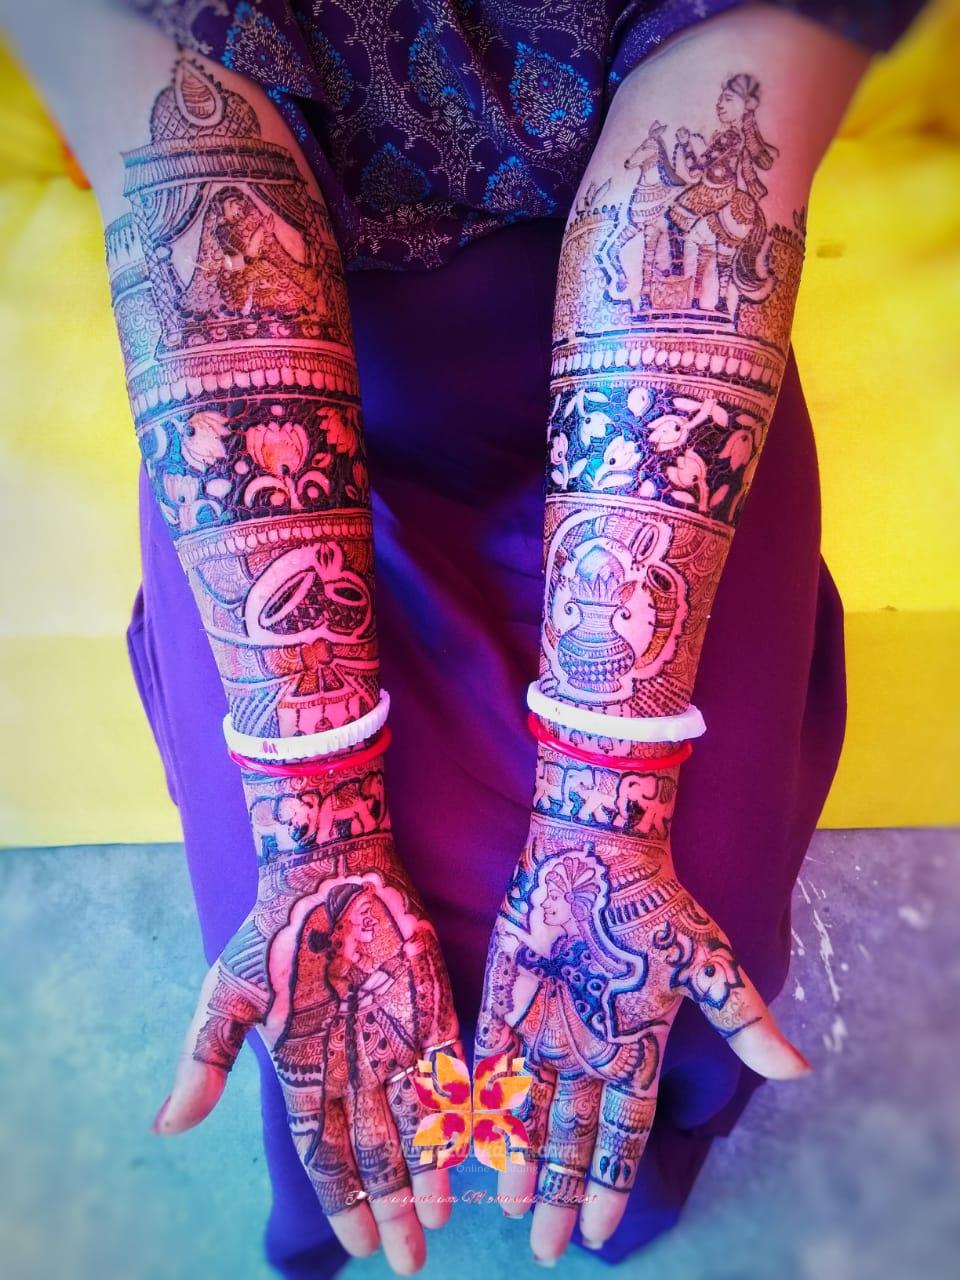 The Eagle Tattoos Studio - Priya small name tattoo done by shubhu #name  #nametattoo #tattoolovers #tattoobandung #tattooideas #colourtattoos  #colour #tattoos #tattoosleeve #tattoomodel #tattoostyle #dottattoo  #dotsworktattoo #bandtattoo | Facebook